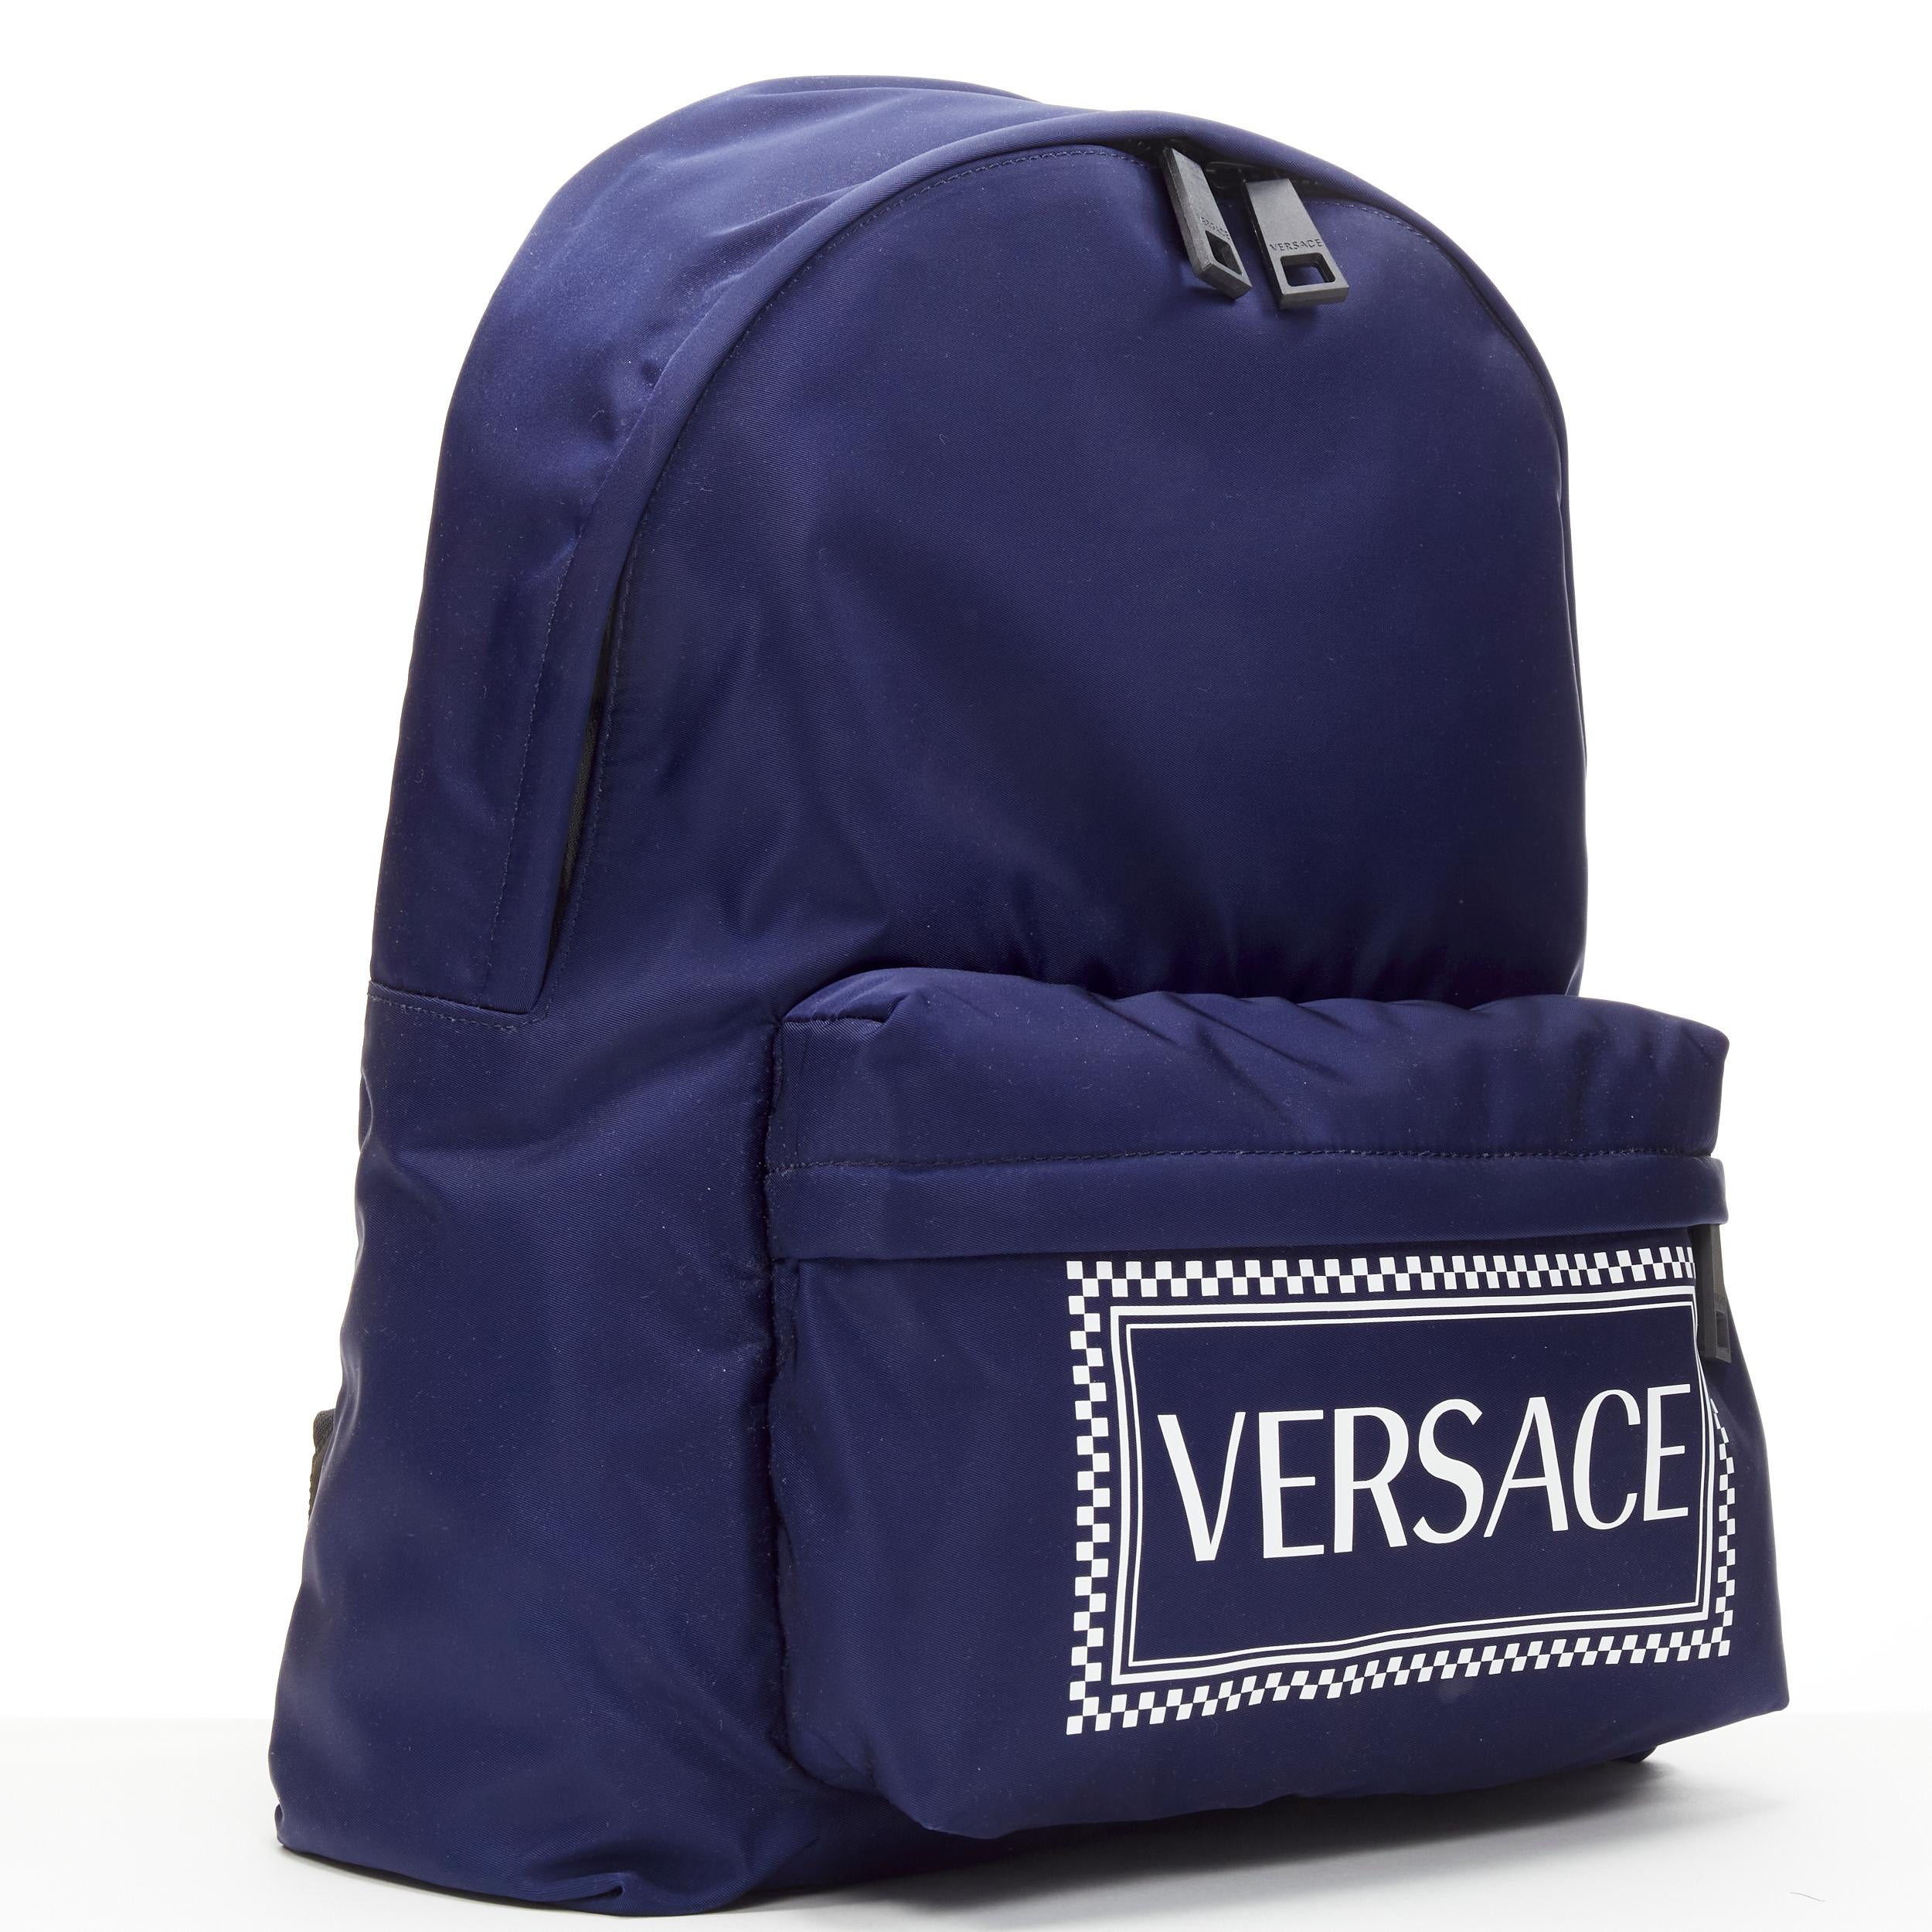 versace backpack blue